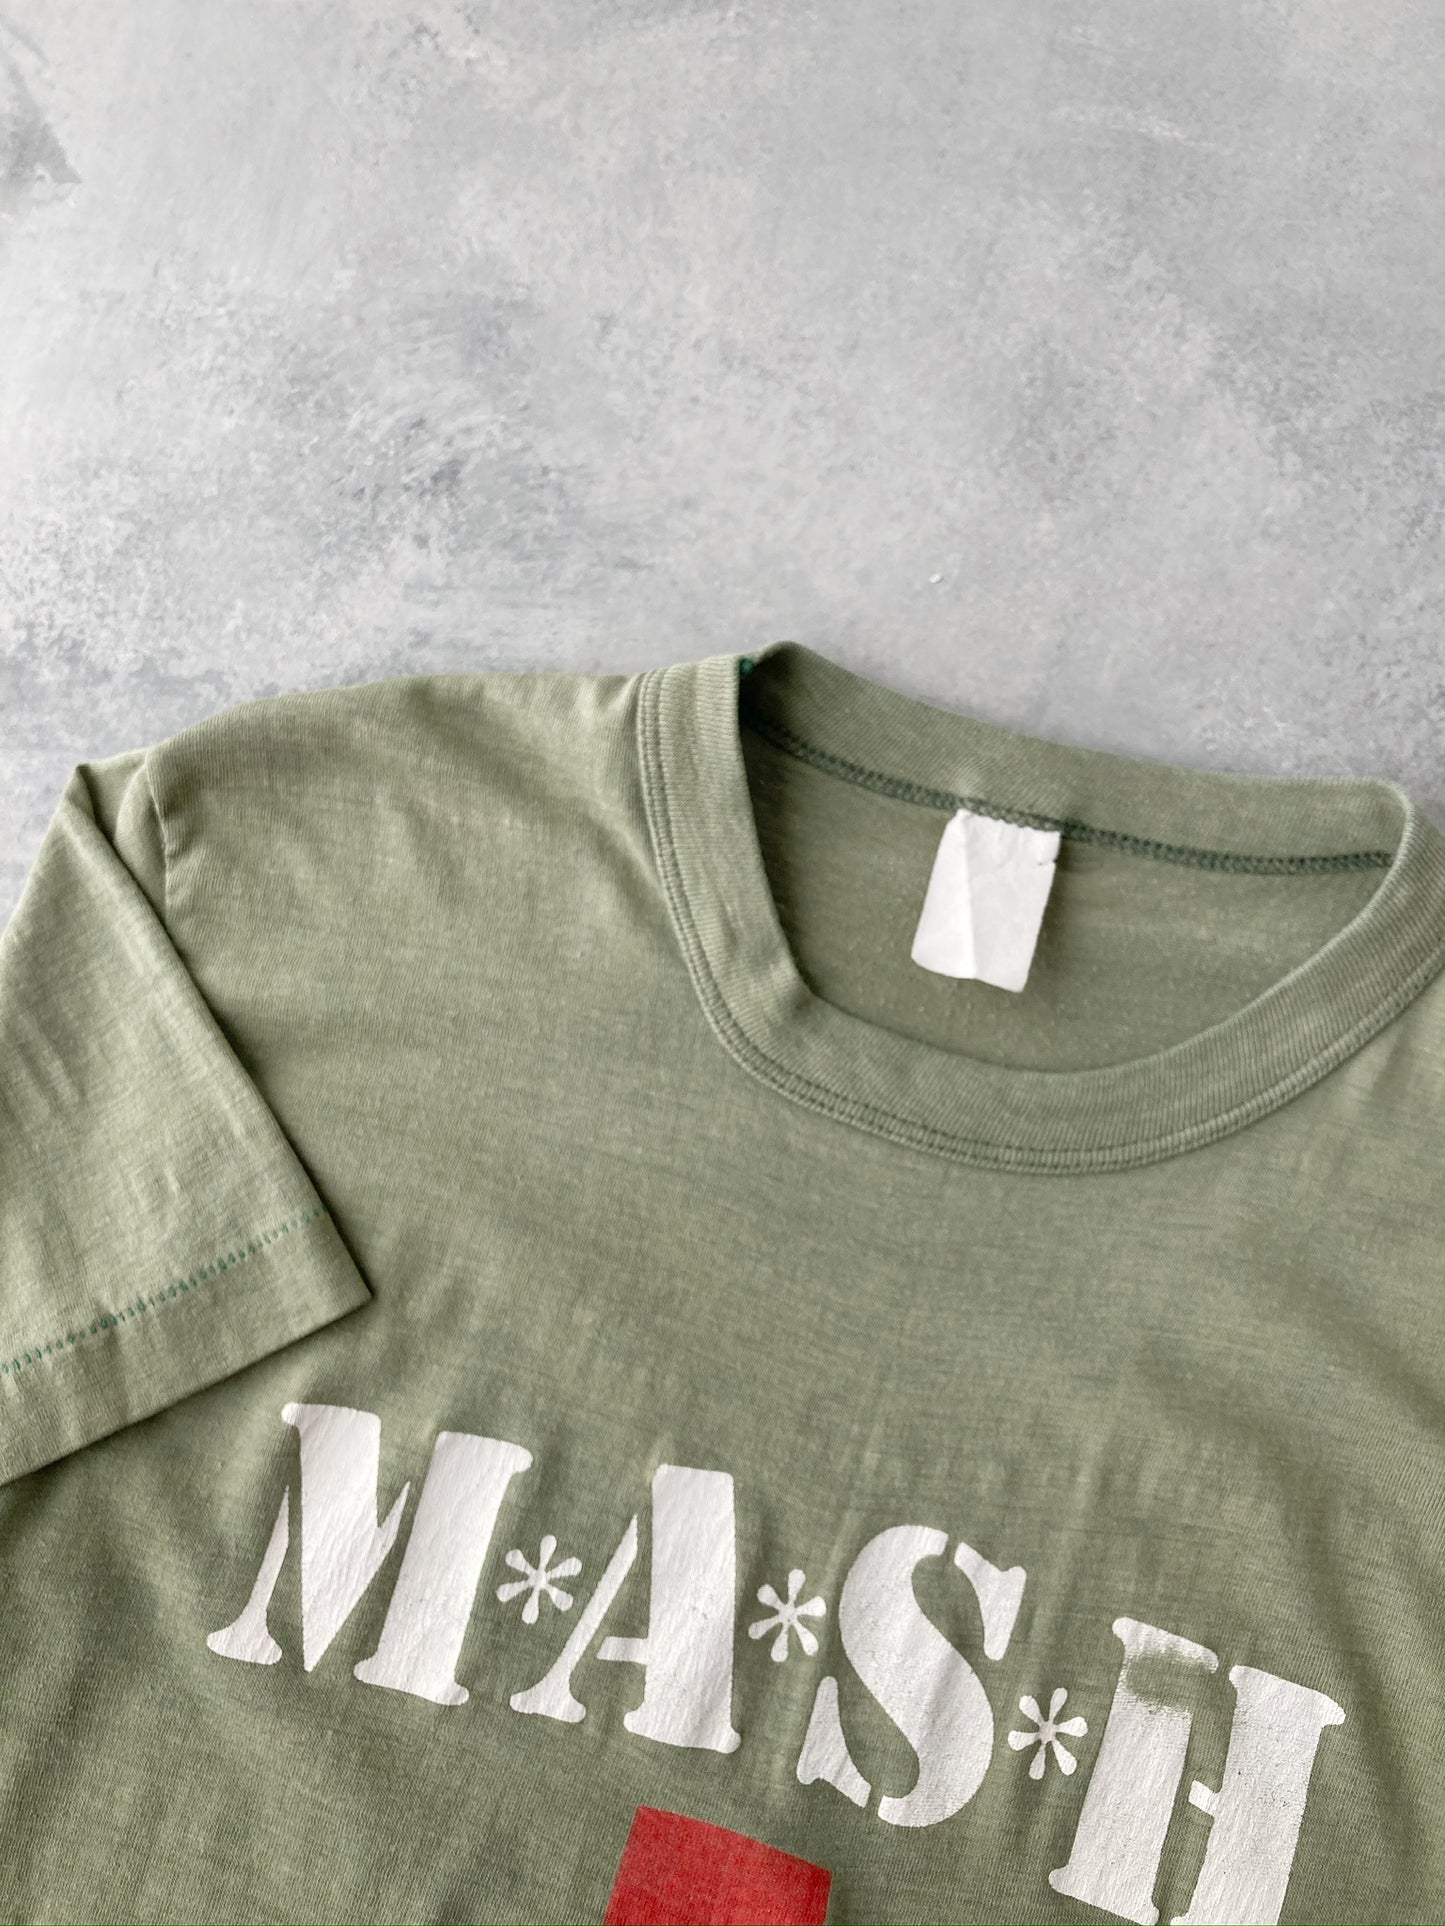 MASH T-Shirt 80's - XS